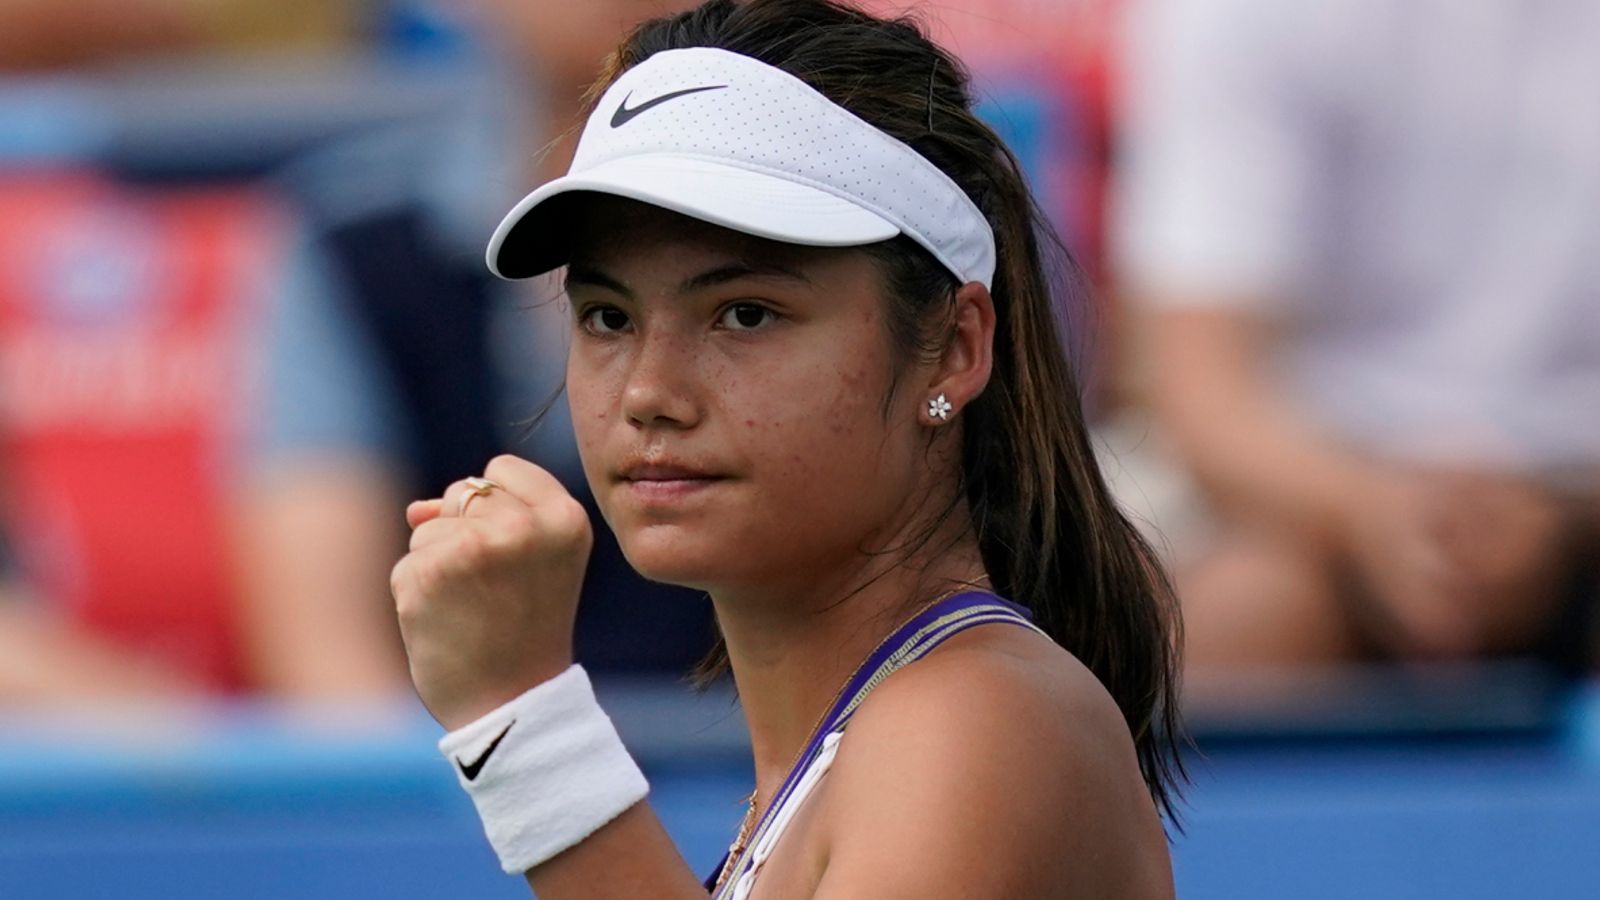 Citi Open: Emma Raducanu beats Camila Osorio to reach quarter-finals in Washington